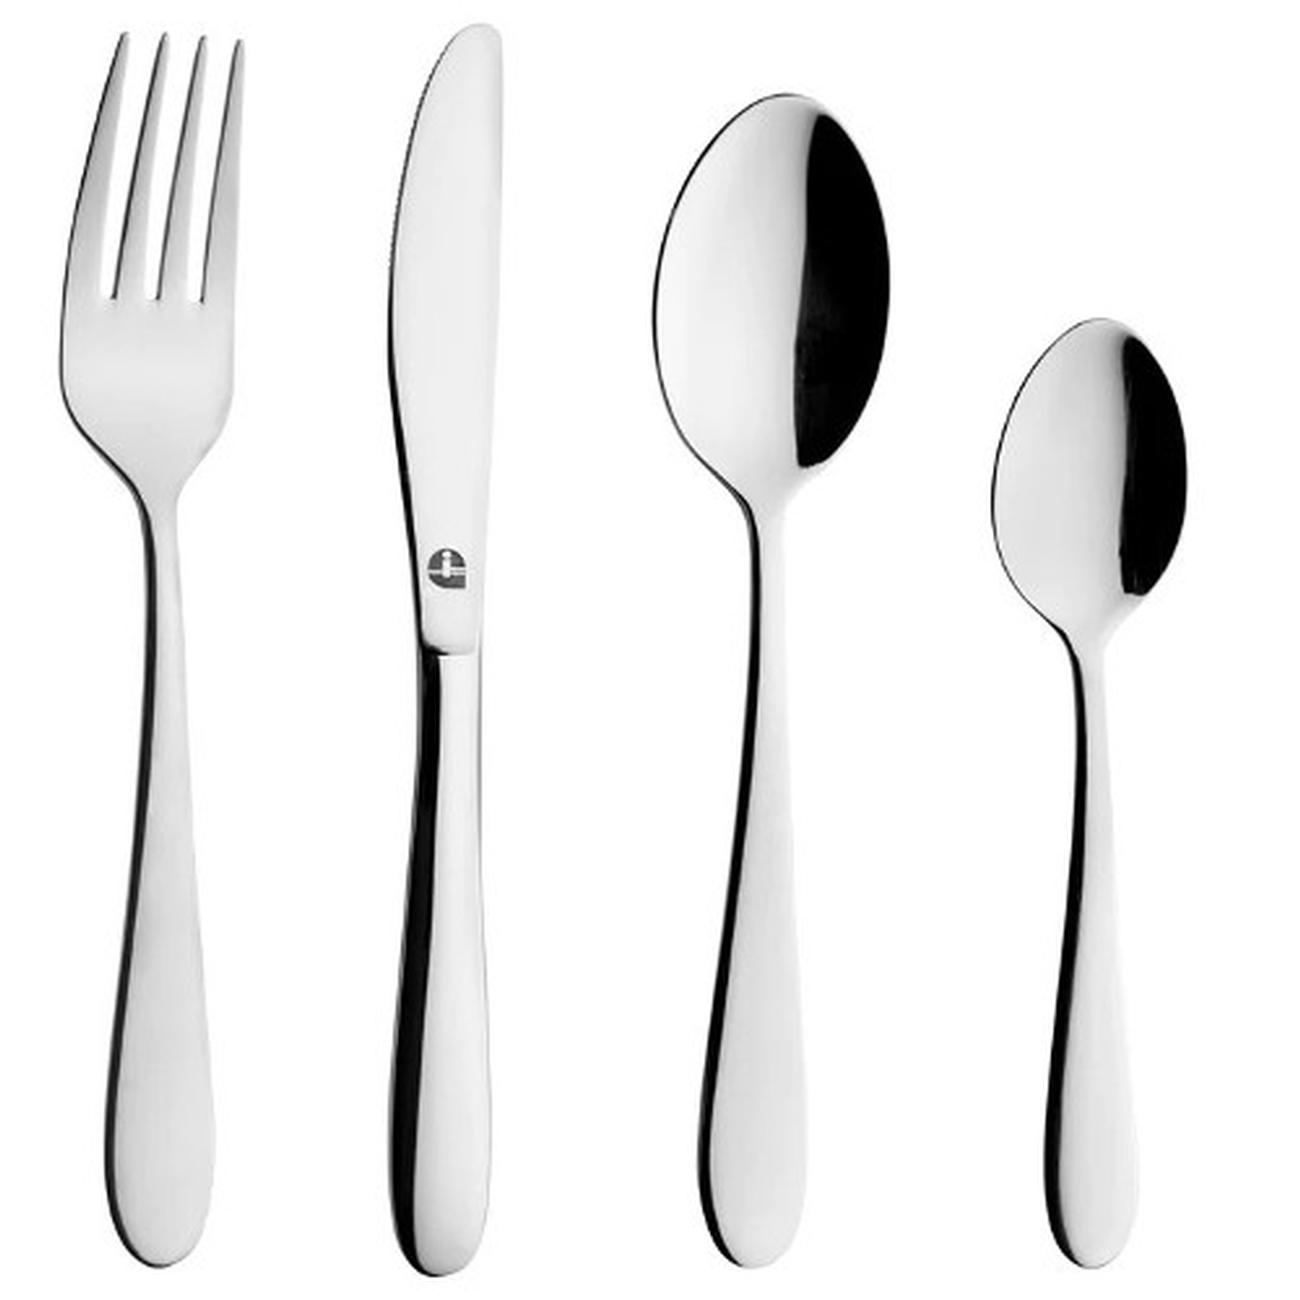 grunwerg-windsor-4pc-kids-cutlery-set - Grunwerg Windsor 4pc Child's Cutlery Set